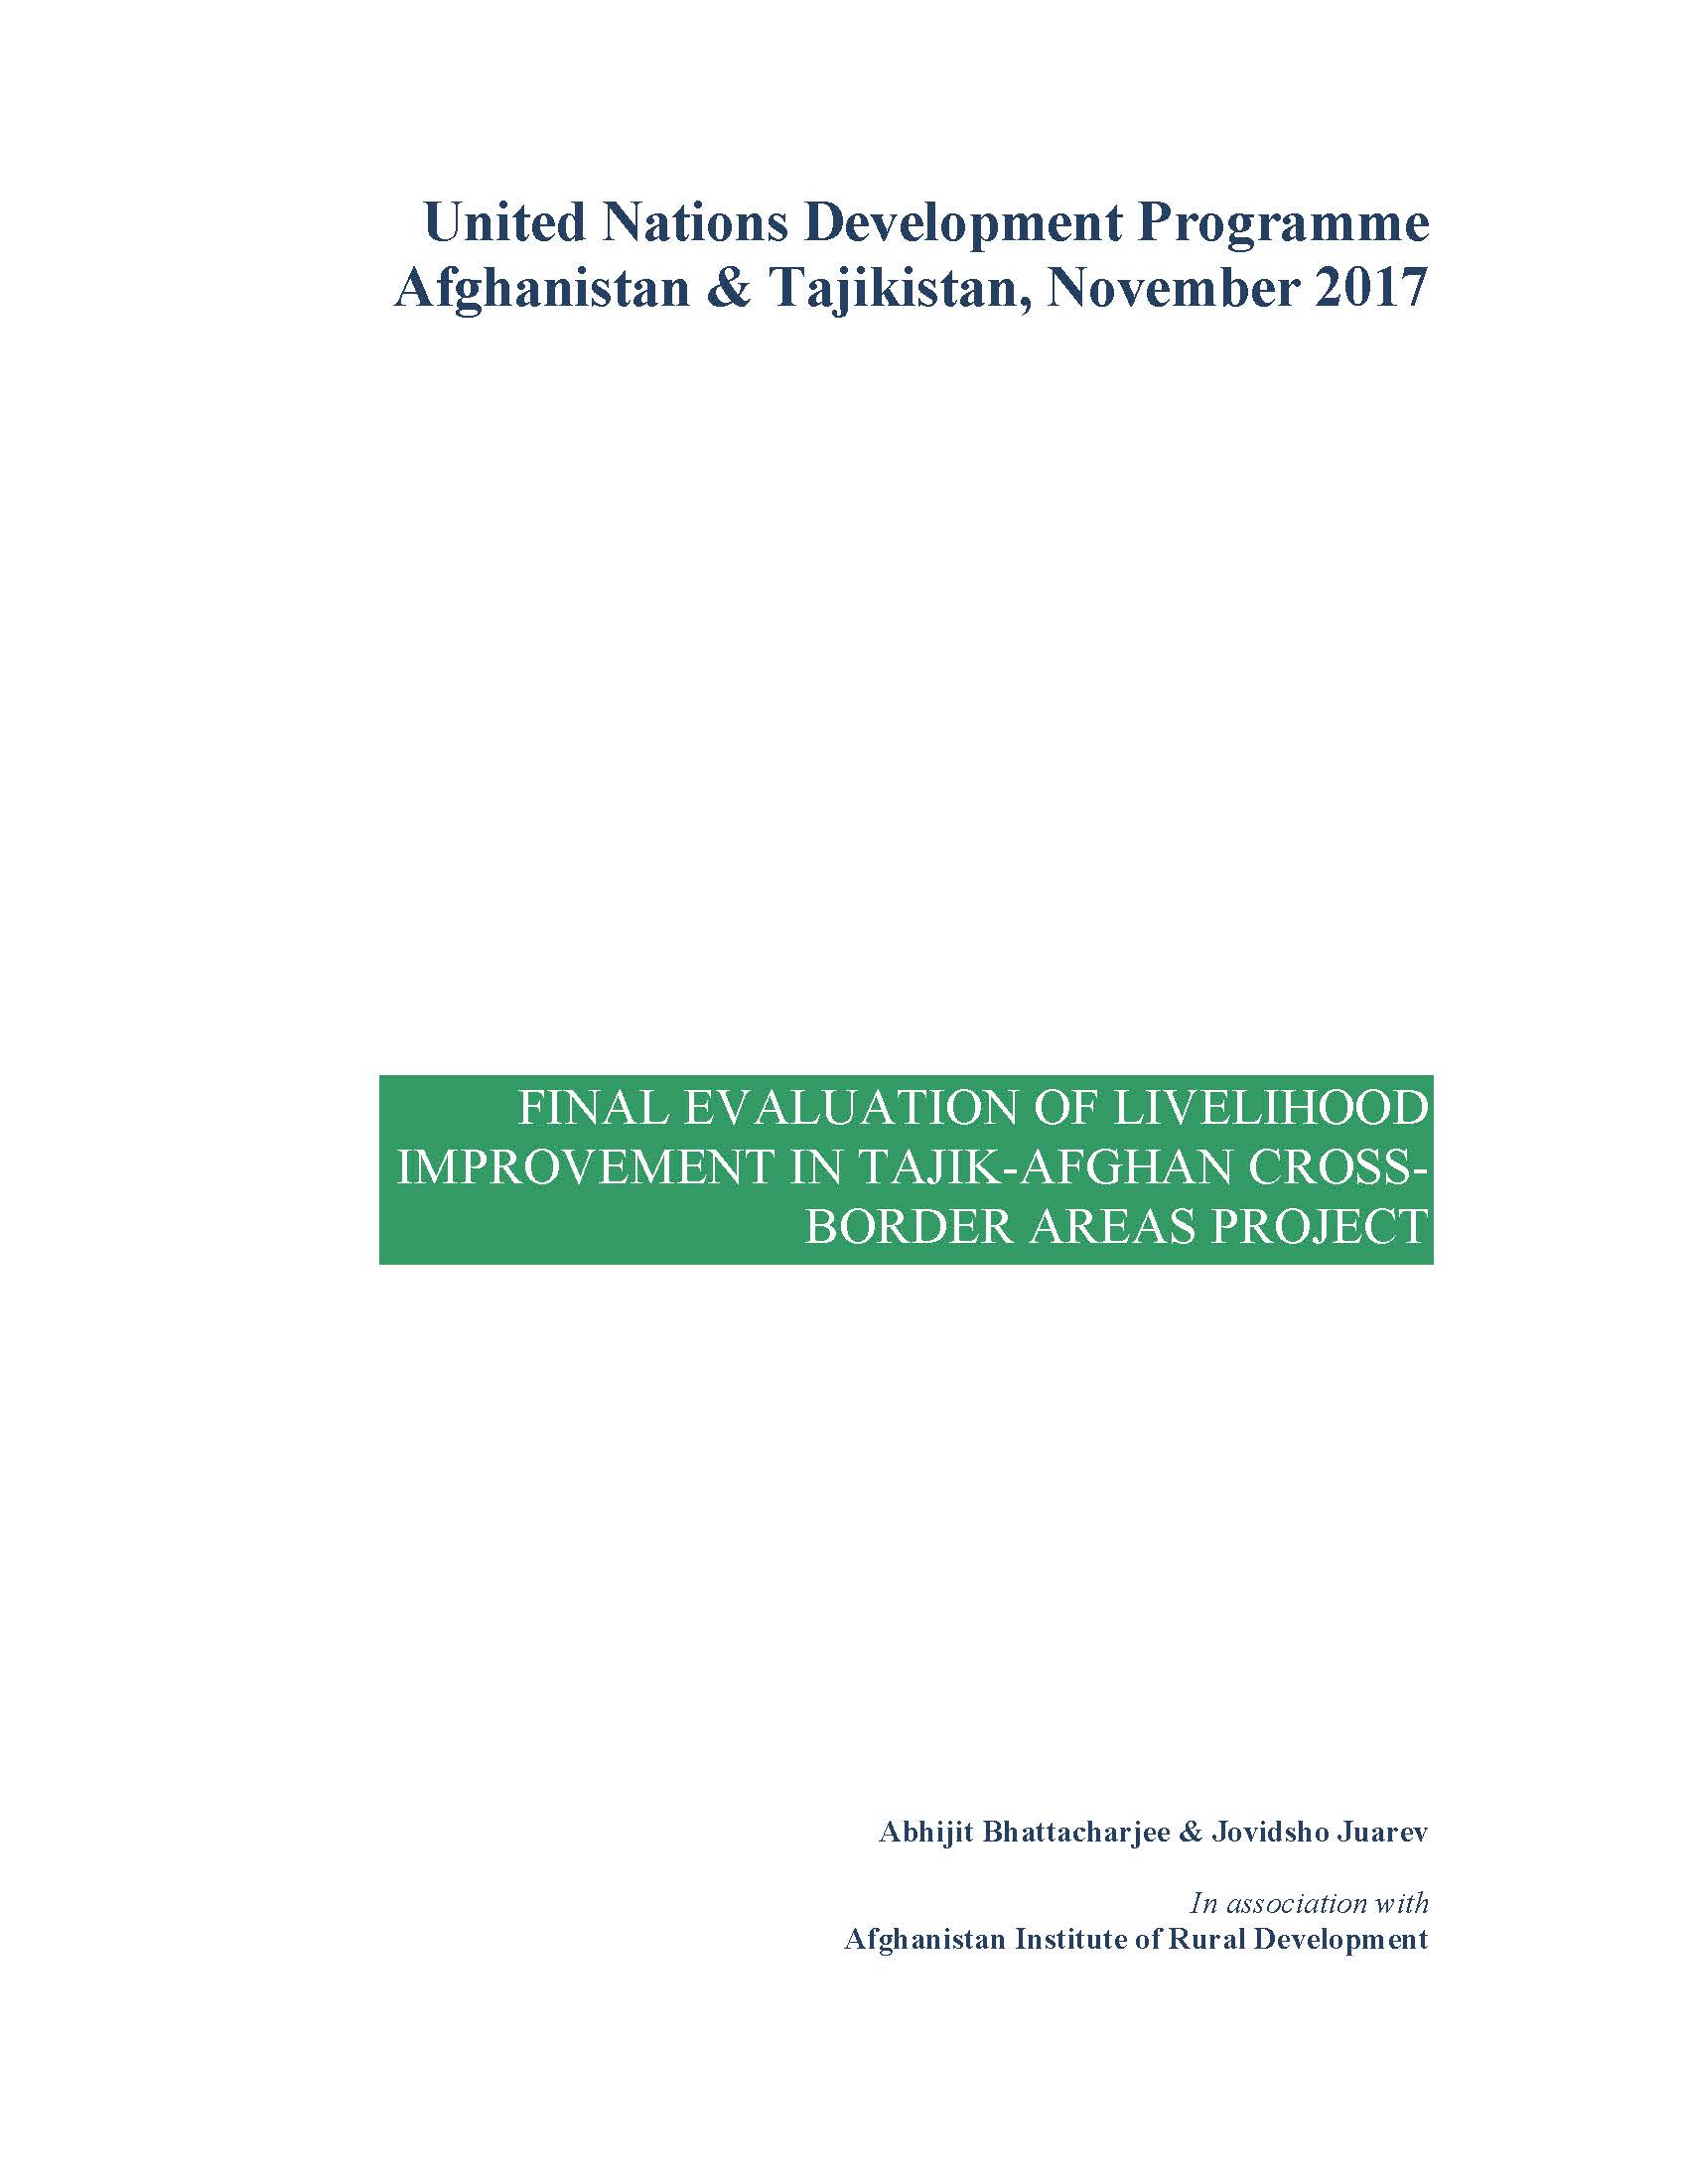 Final Evaluation of Livelihood Improvement in Tajik-Afghan Cross-Border Areas (LITACA) project